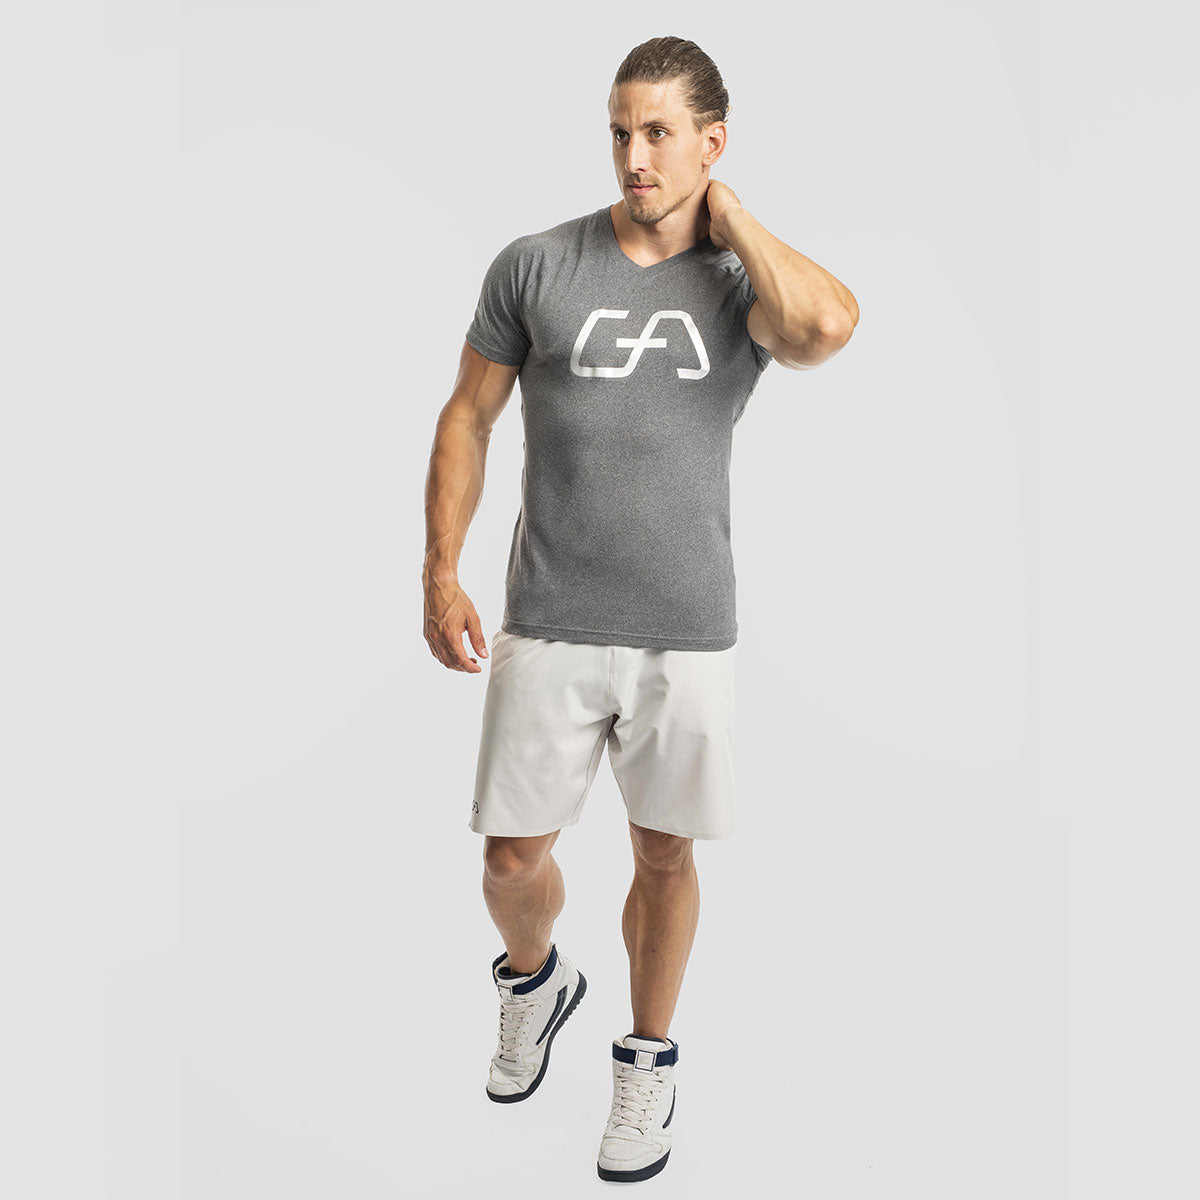 3/4 sleeve raglan shirt — Personal Fitness Training Center